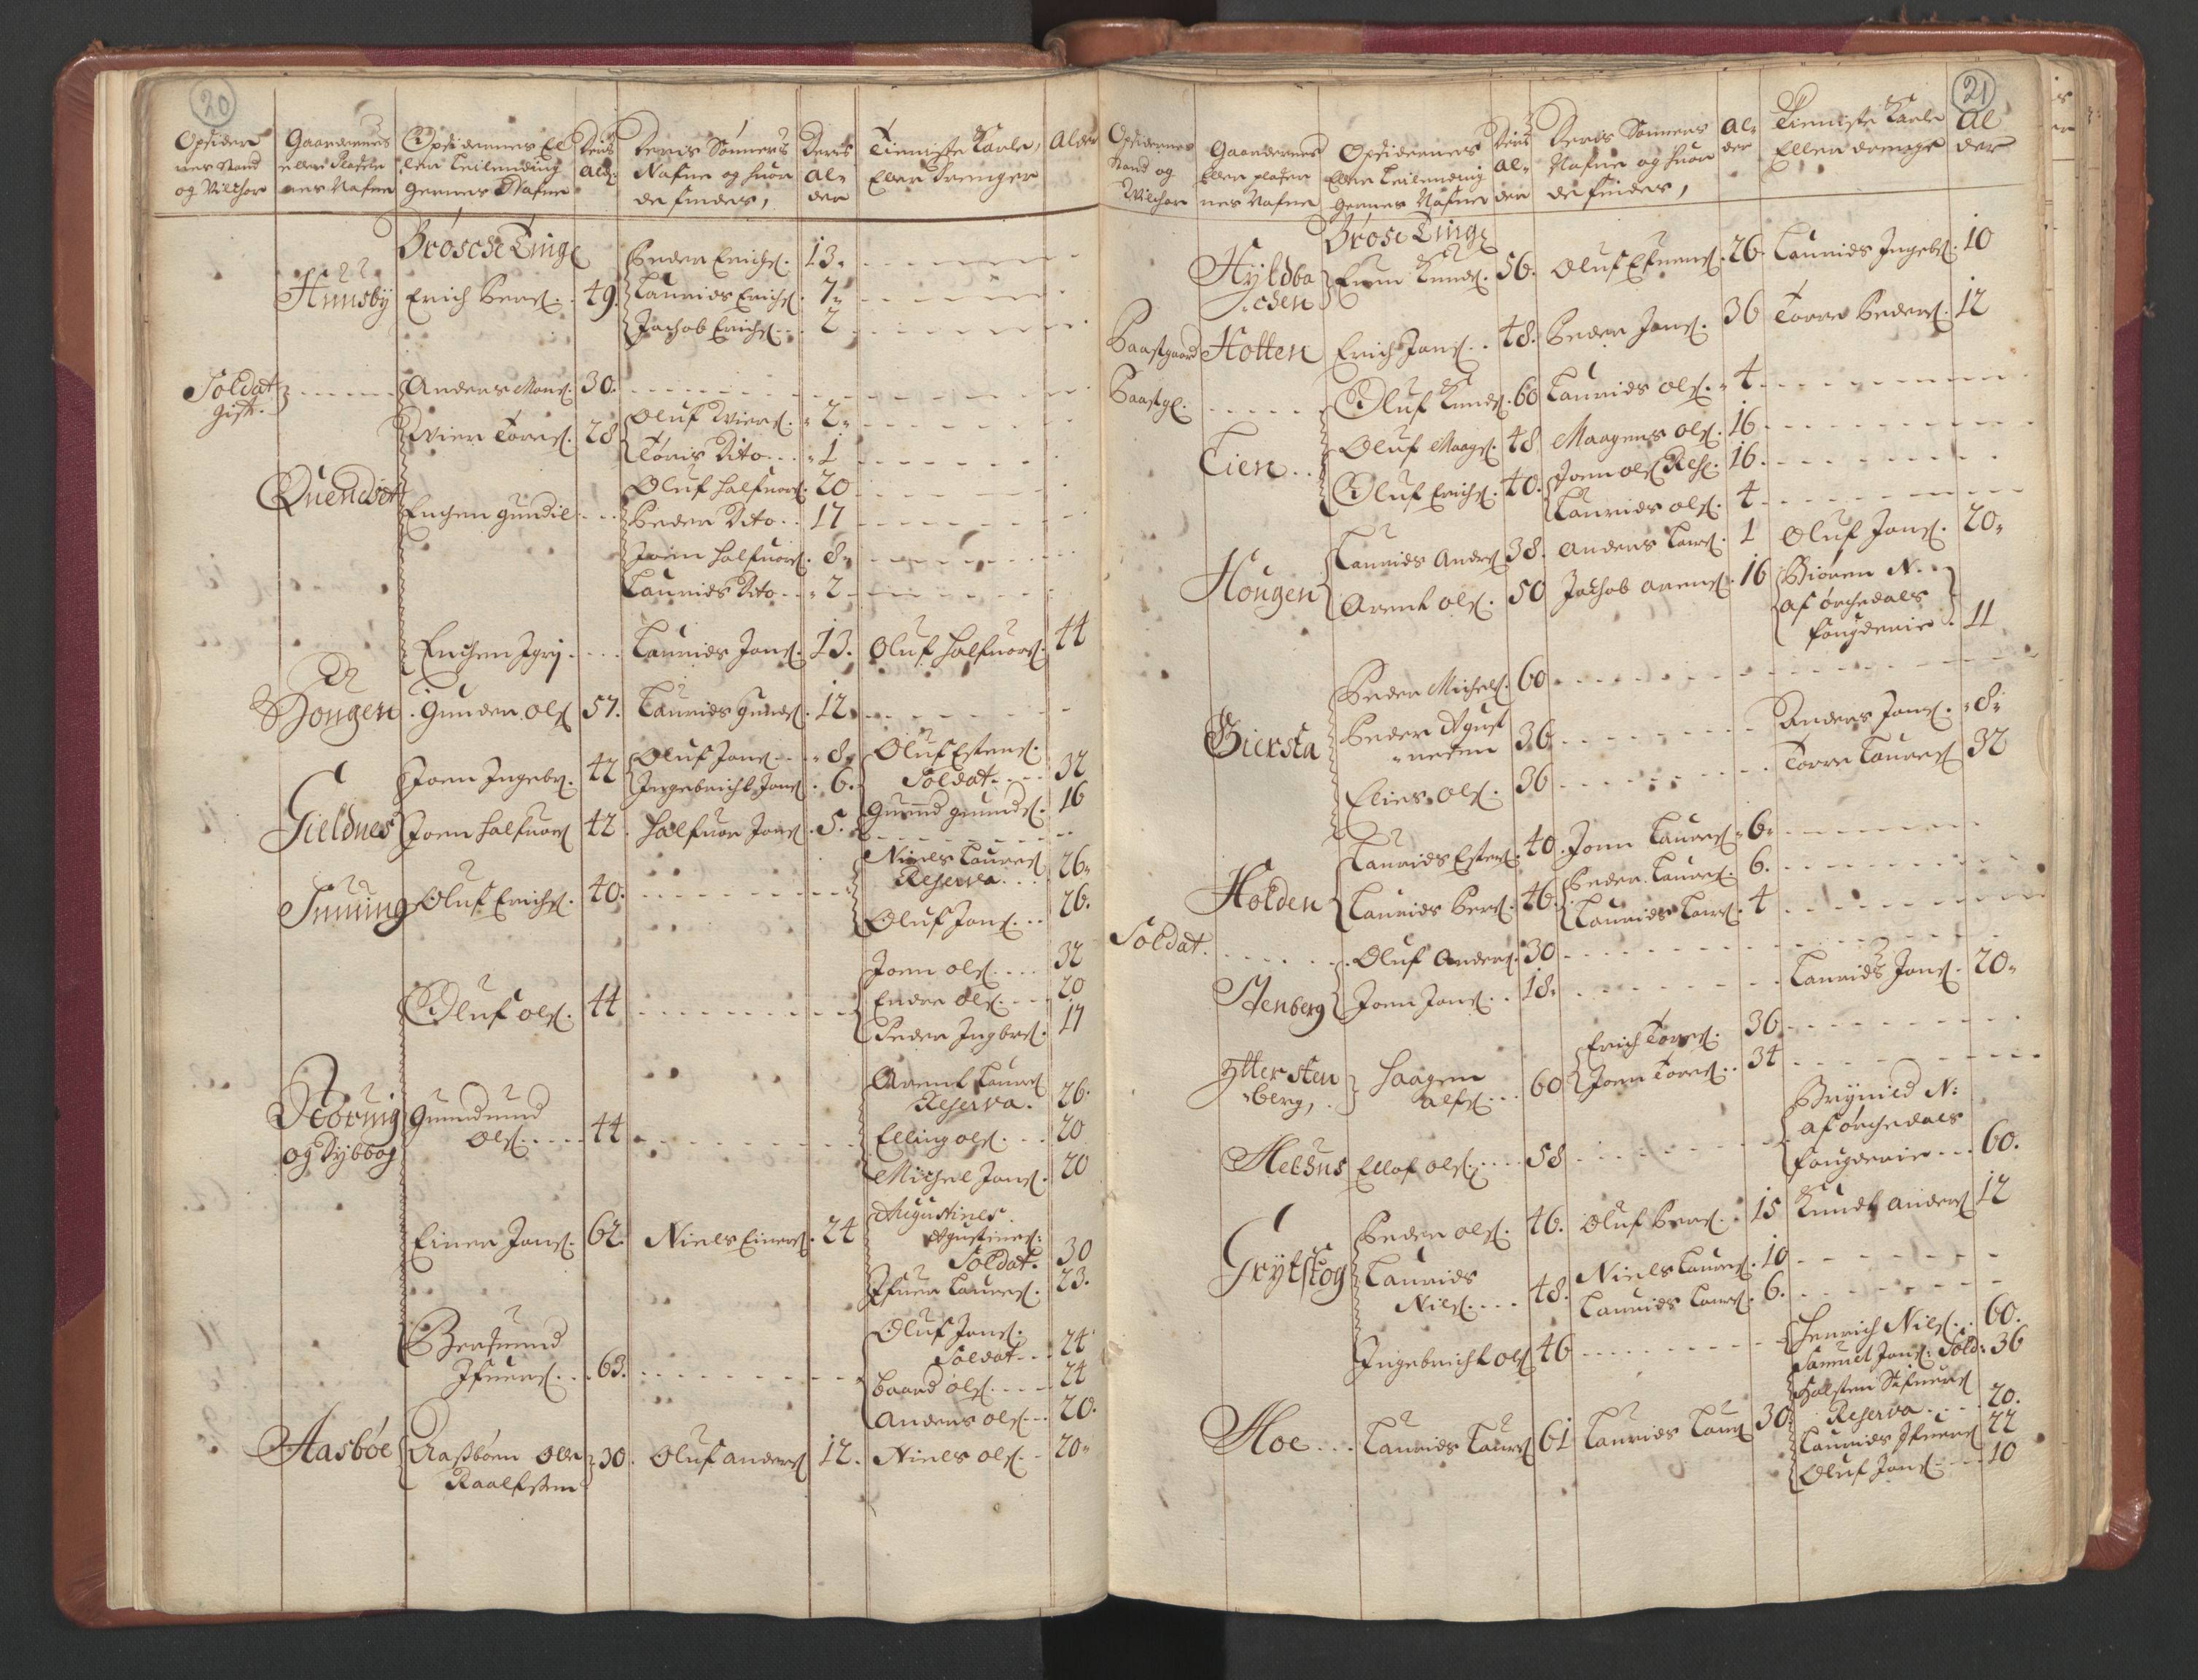 RA, Manntallet 1701, nr. 11: Nordmøre fogderi og Romsdal fogderi, 1701, s. 20-21